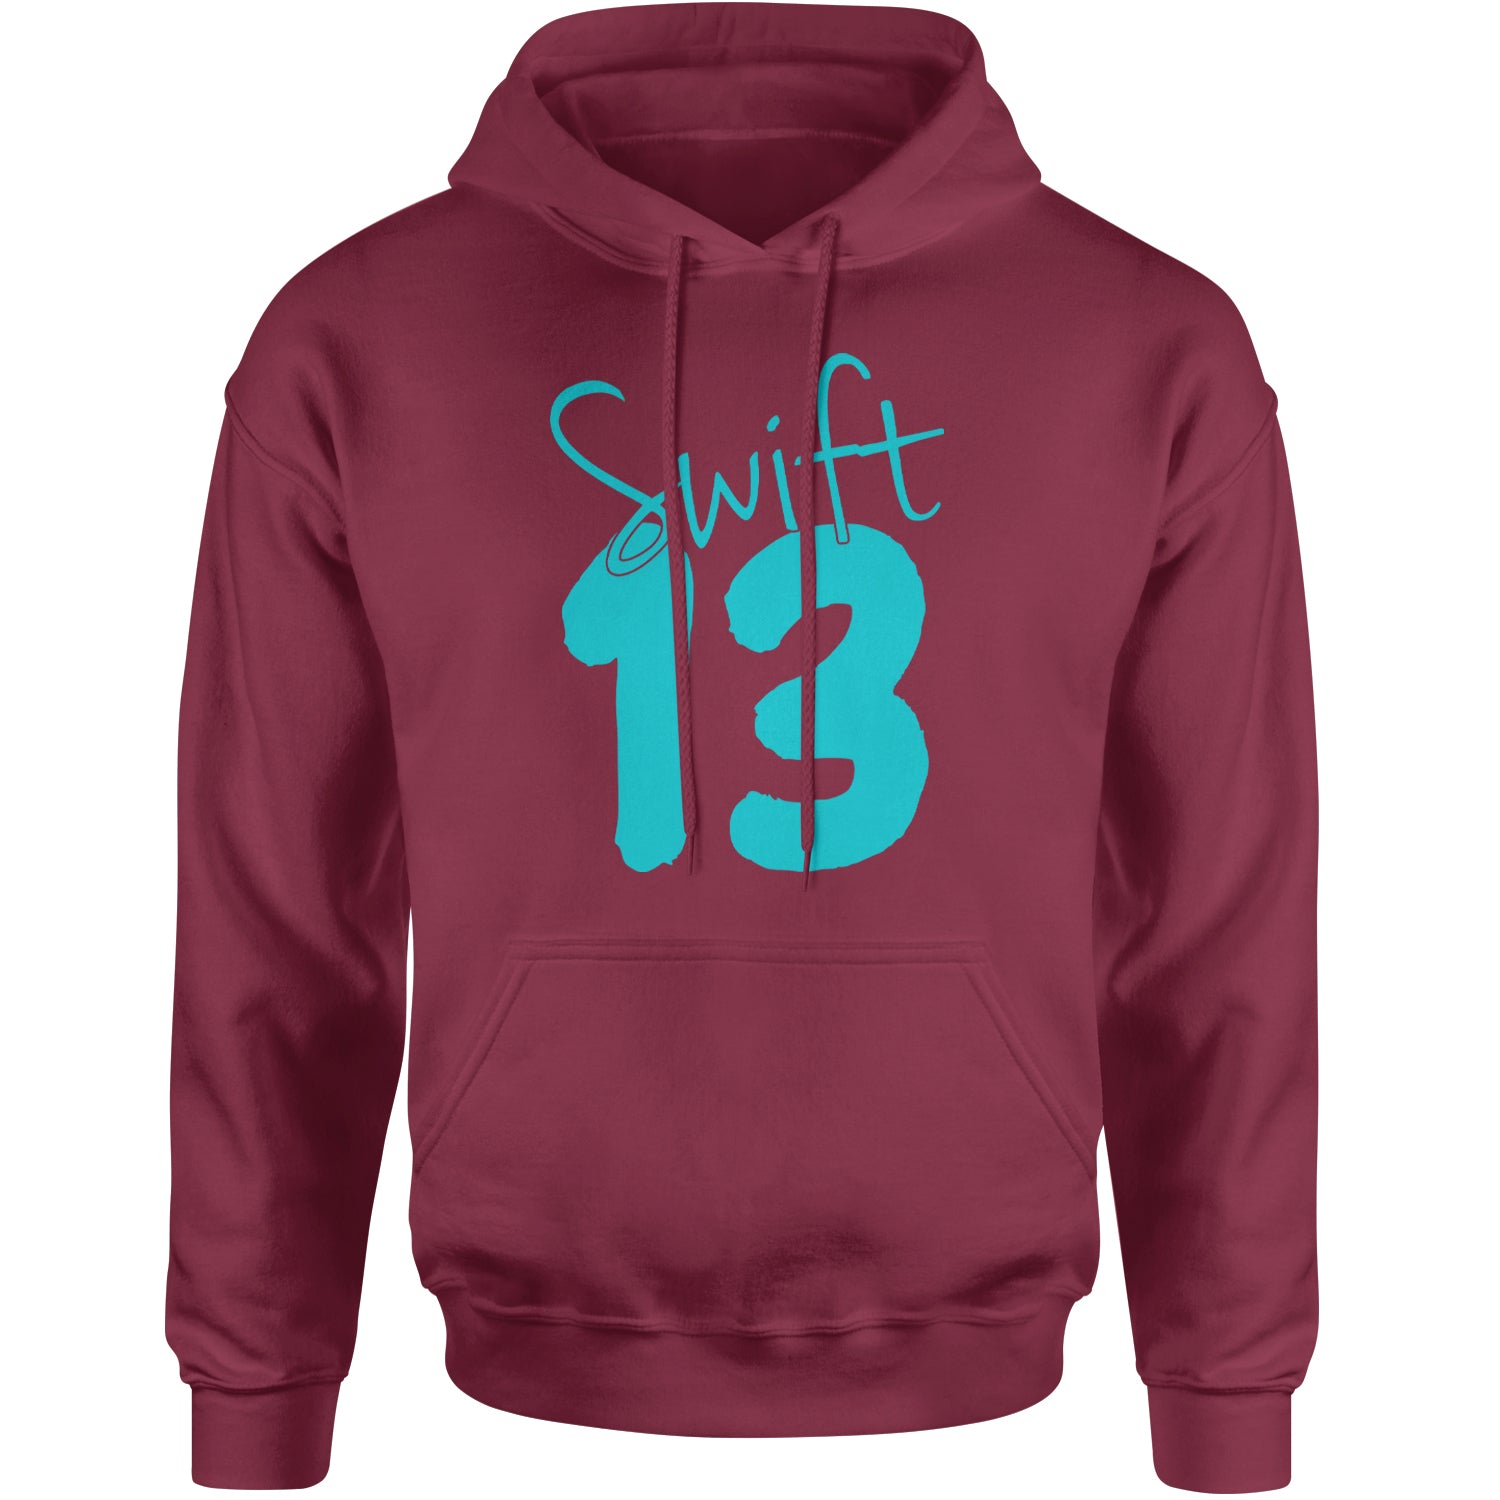 13 Swift 13 Lucky Number Era TTPD Adult Hoodie Sweatshirt Maroon